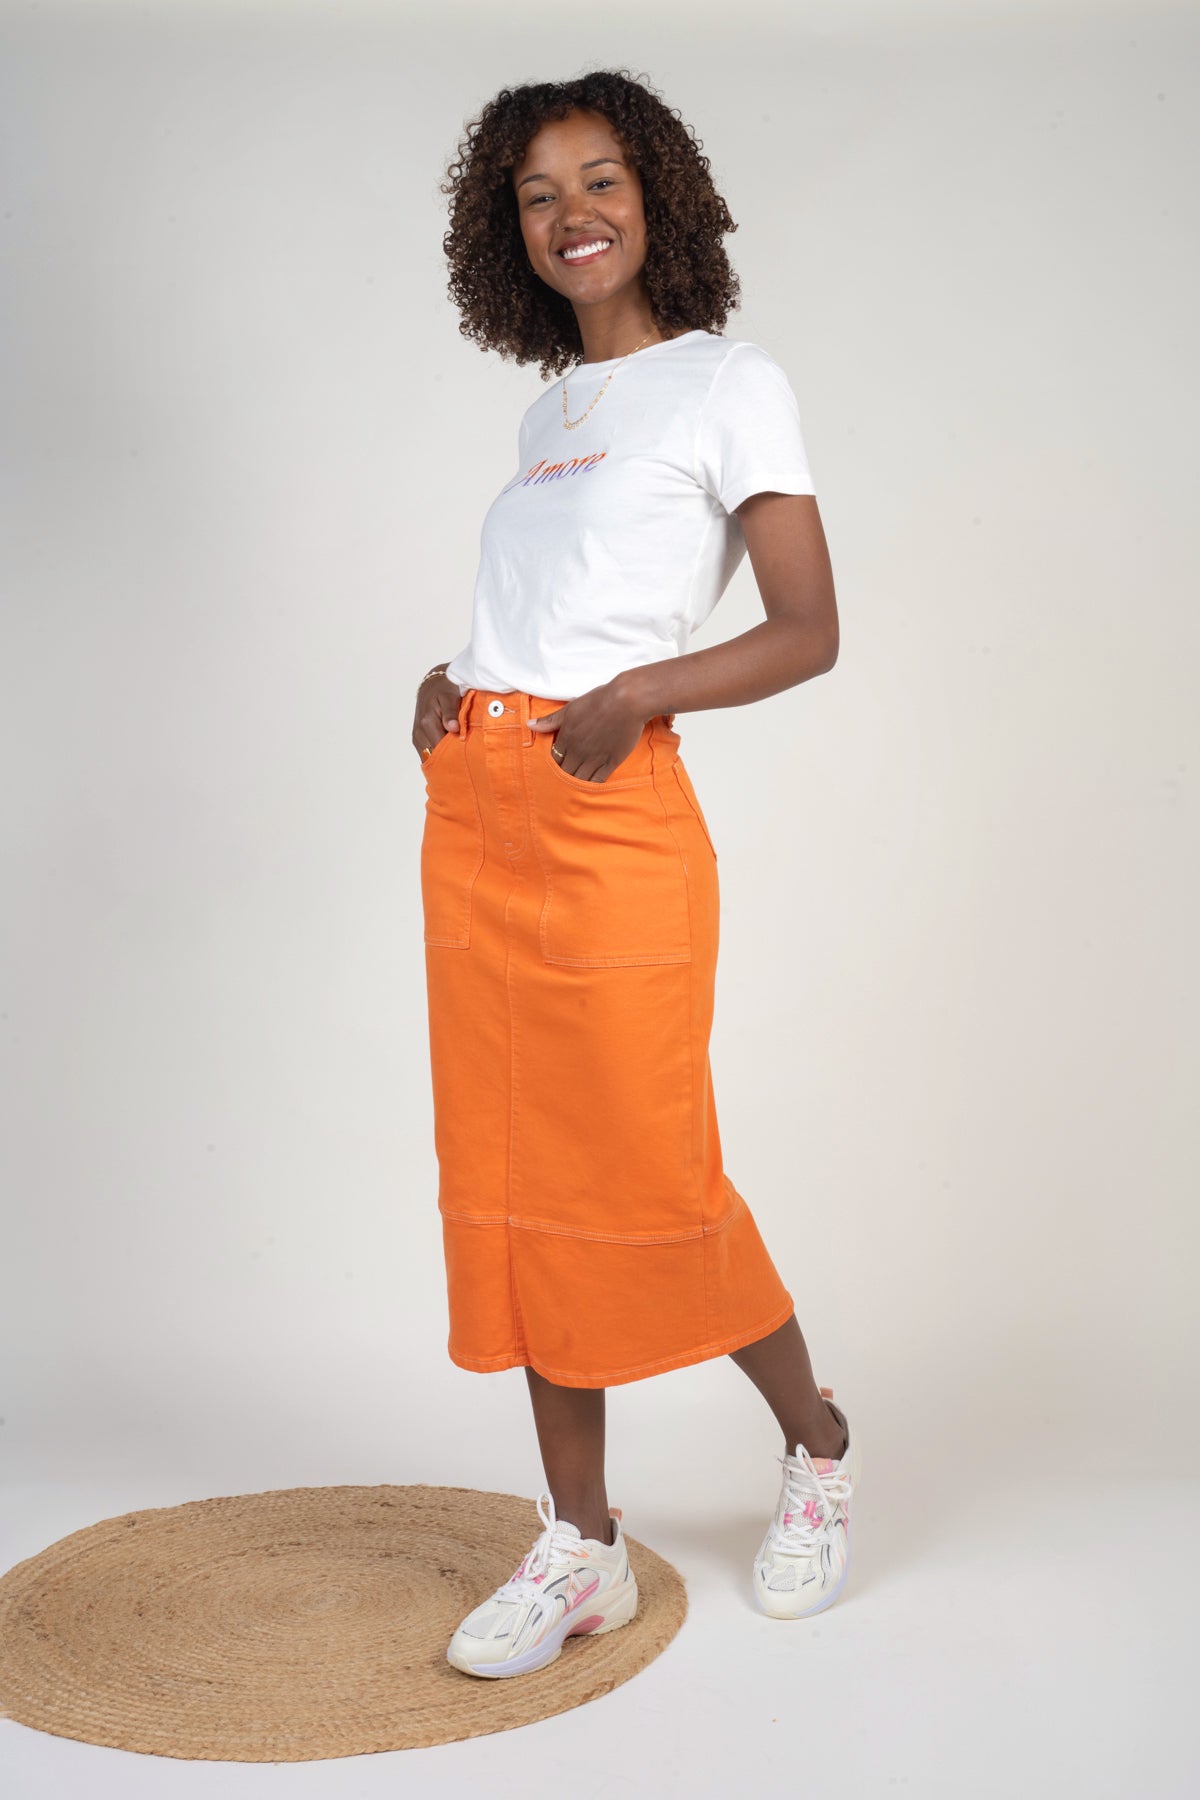 Cenny Skirt Persimmon Orange